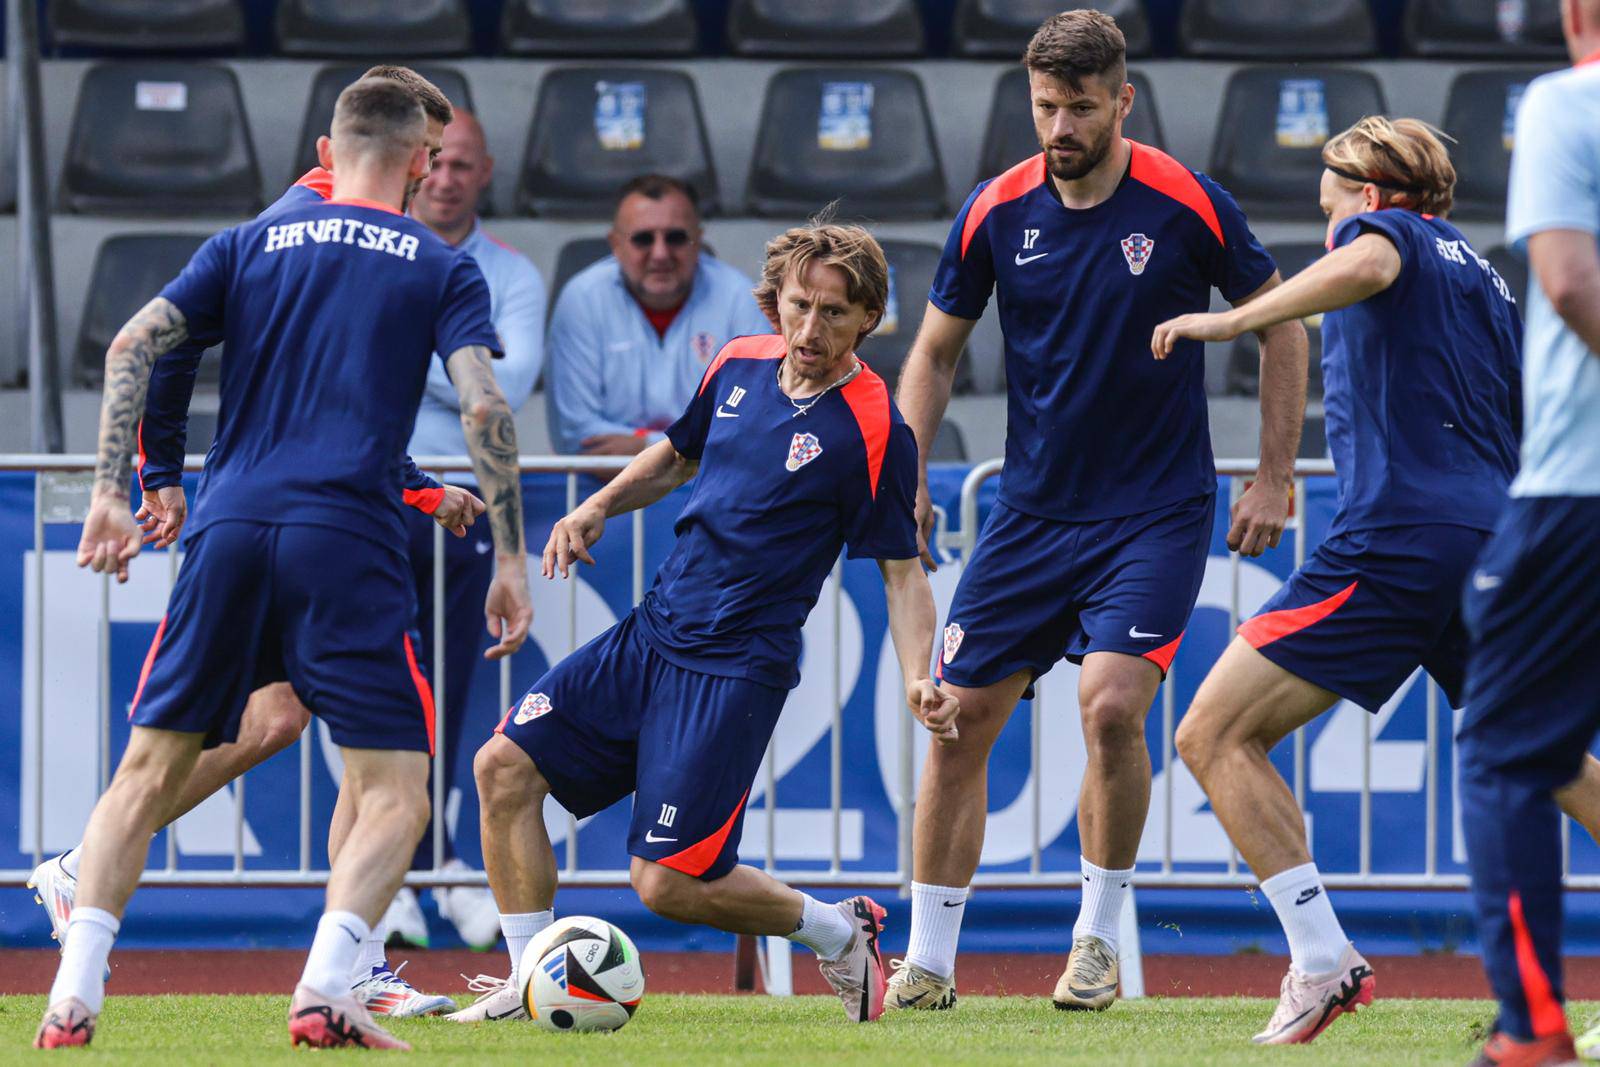 Neuruppin: Trening hrvatske nogometne reprezentacije uoči utakmice s Italijom 